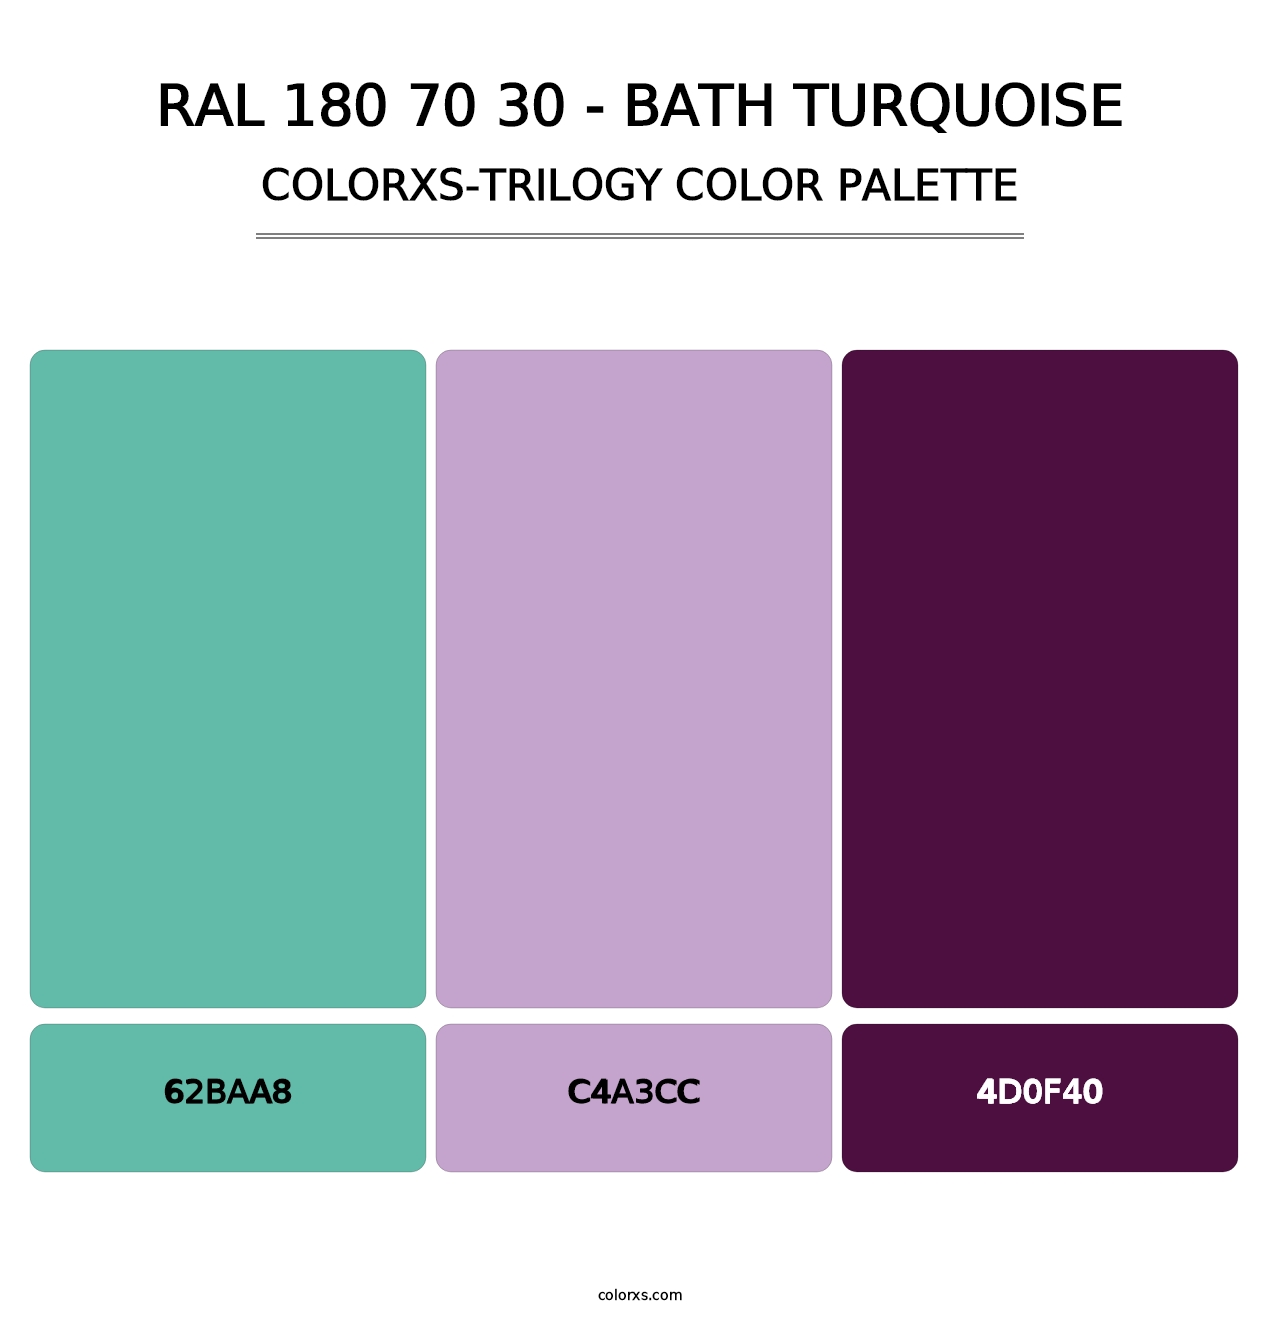 RAL 180 70 30 - Bath Turquoise - Colorxs Trilogy Palette